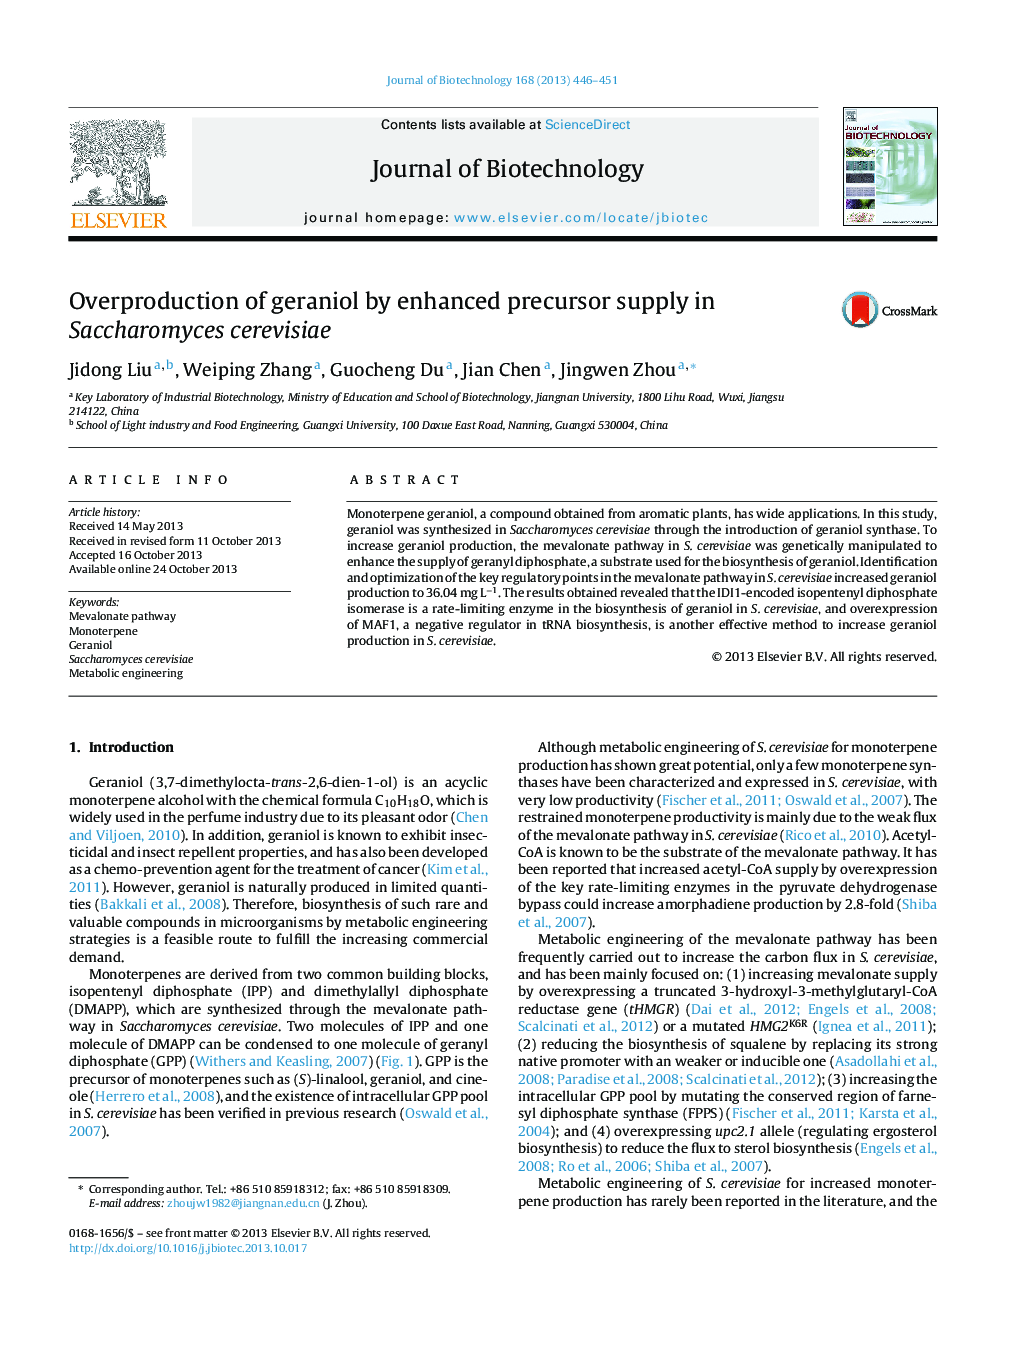 Overproduction of geraniol by enhanced precursor supply in Saccharomyces cerevisiae